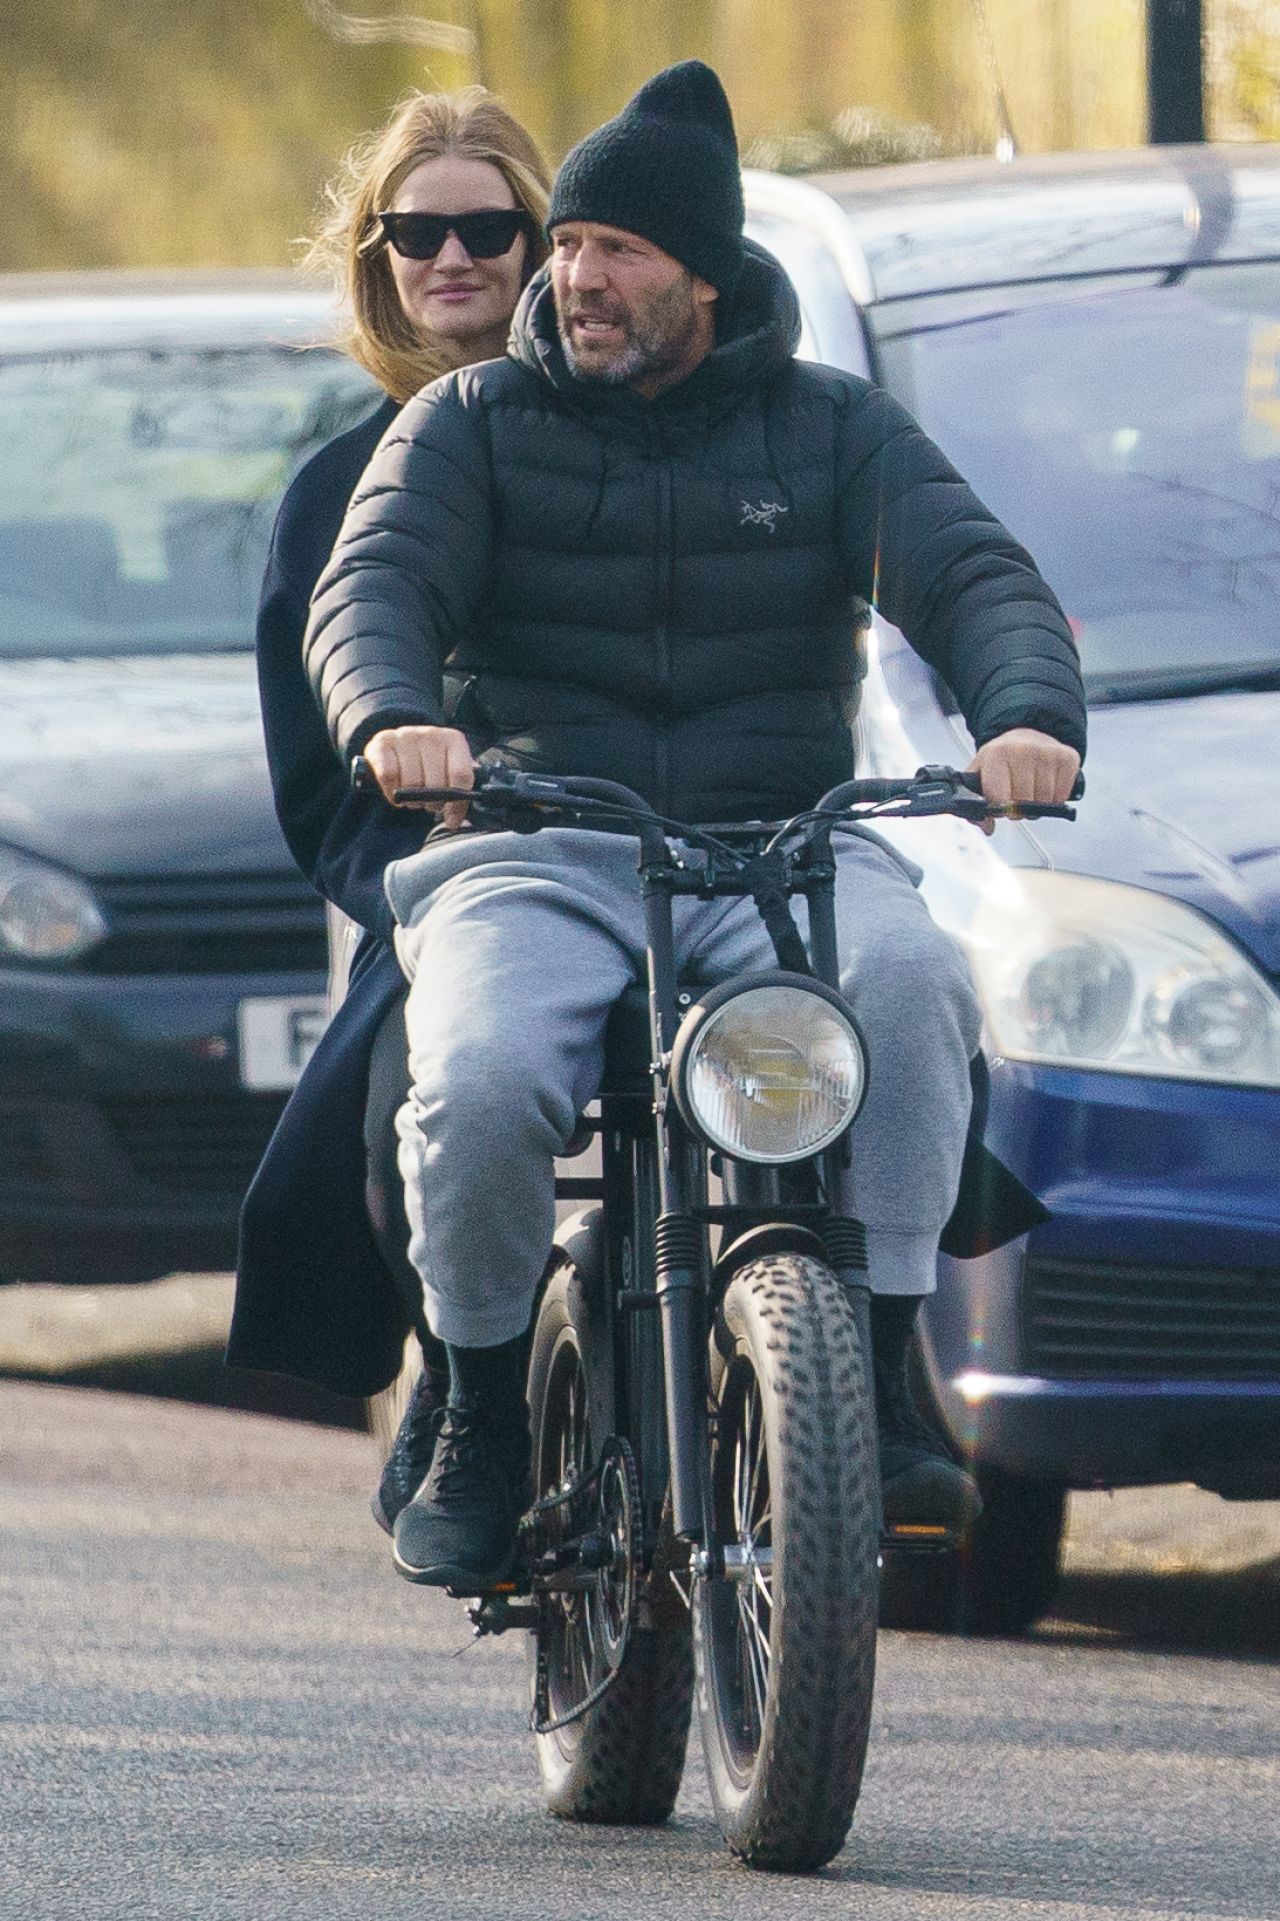 Rosie Huntington Whiteley And Jason Statham Ride On Electric Bike In London 03 24 2021 Celebmafia